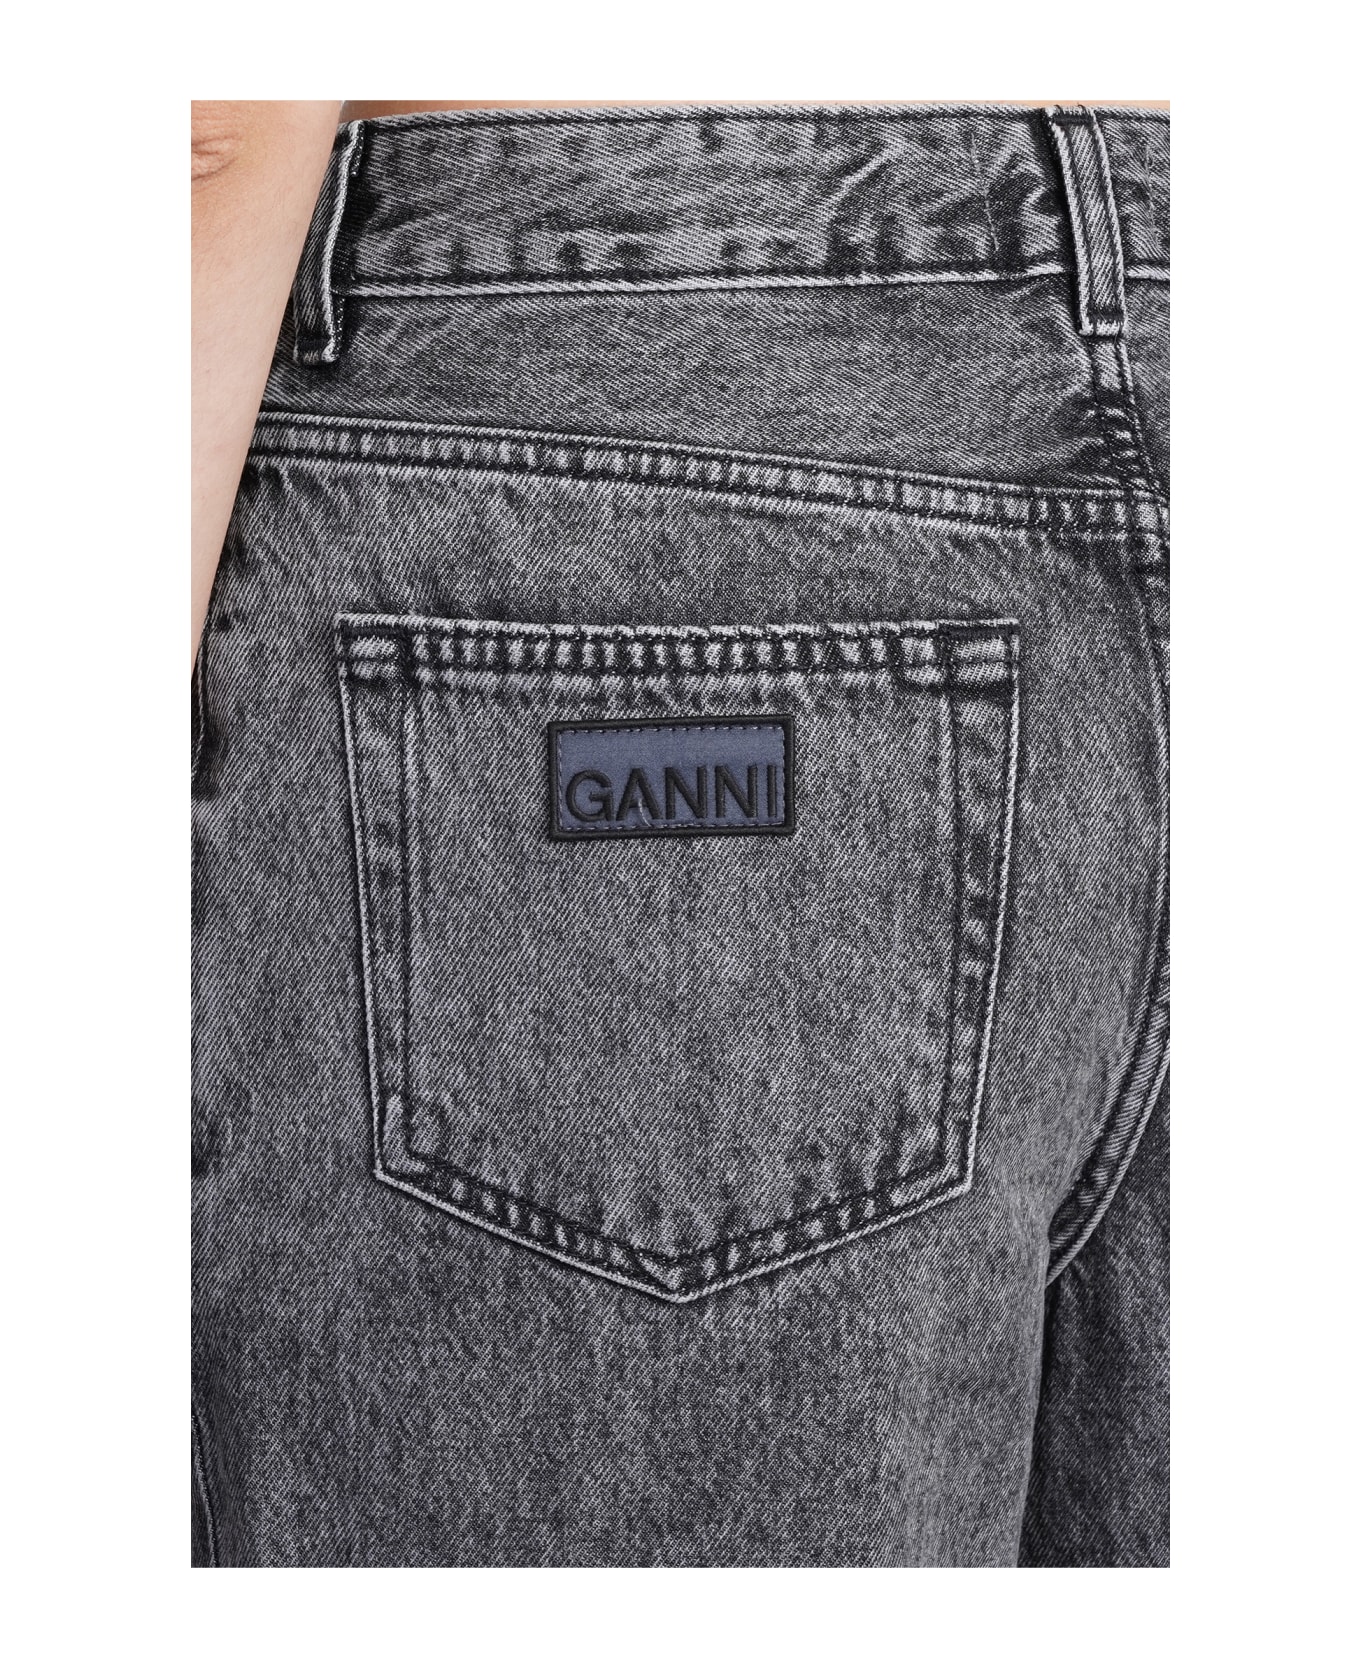 Ganni Cargo Jeans - BLACK WASHED デニム